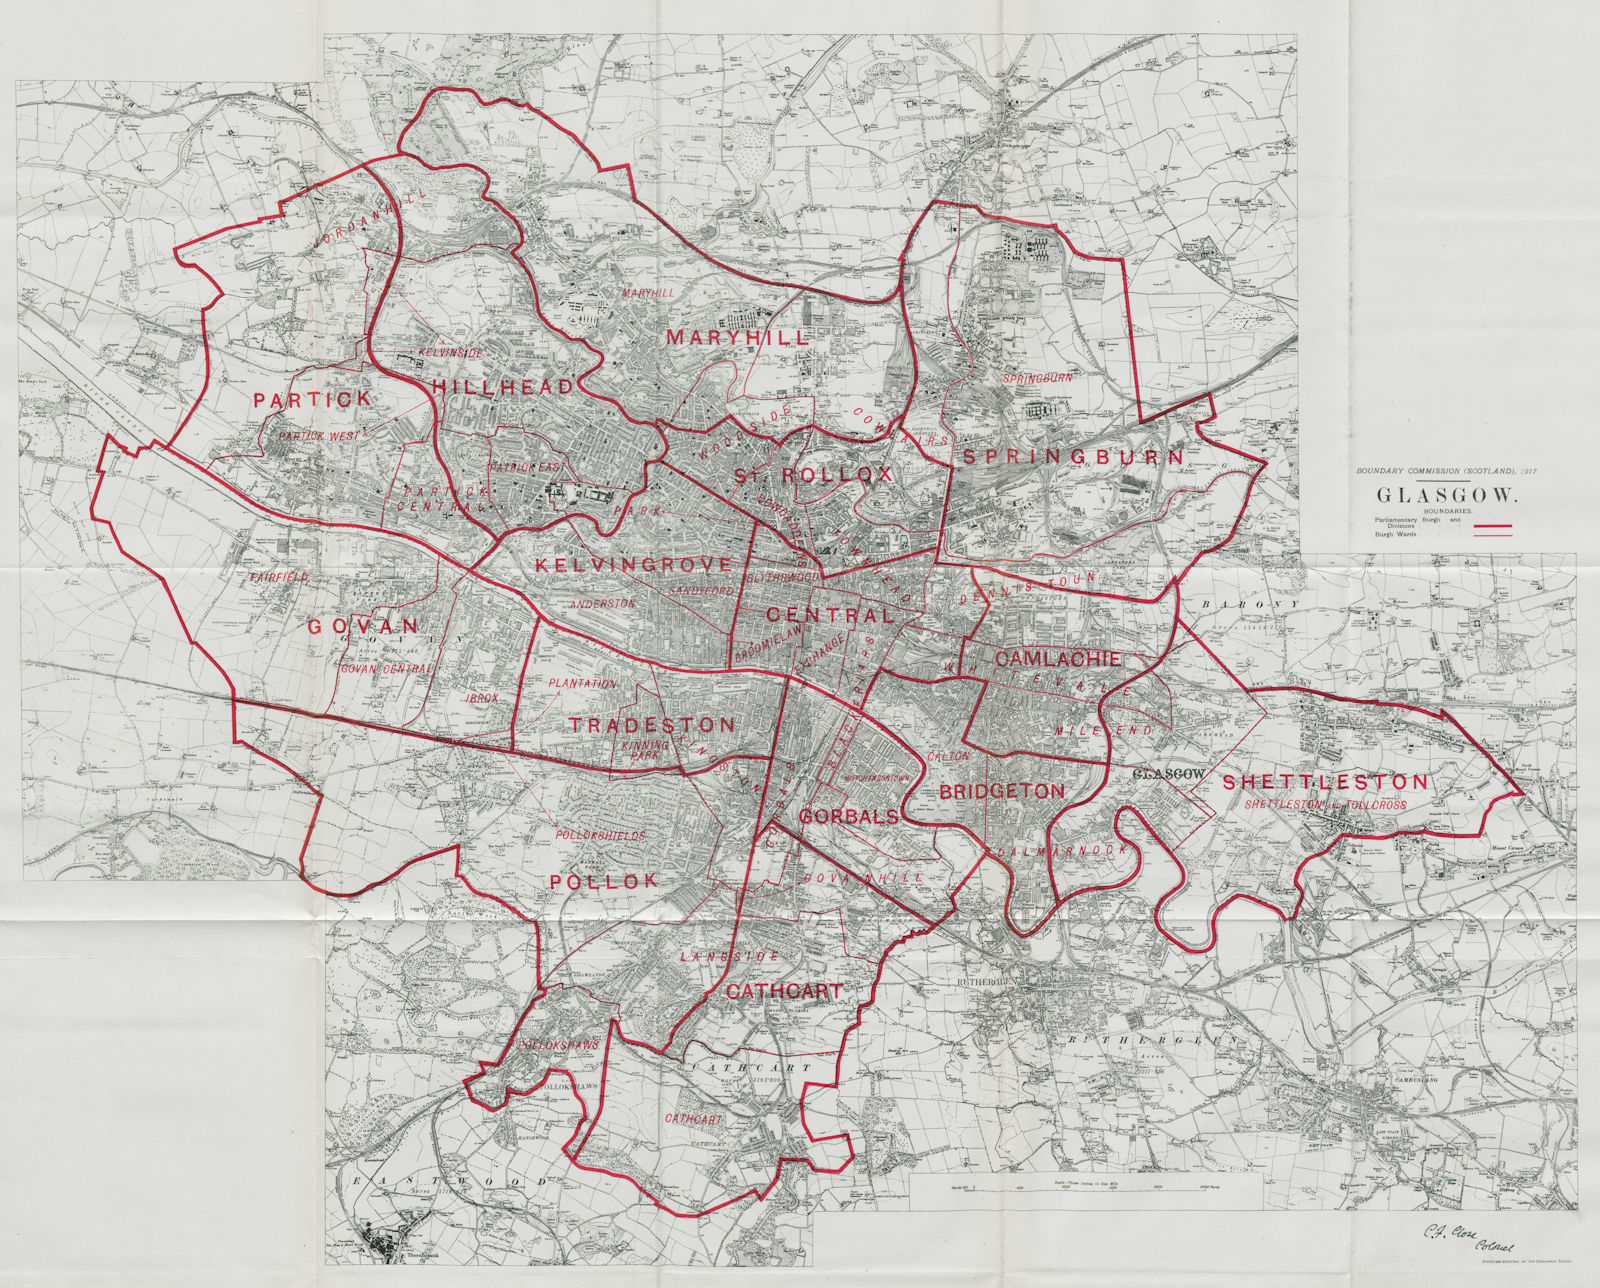 Glasgow Parliamentary Borough. Scotland. BOUNDARY COMMISSION. Whitlock 1917 map